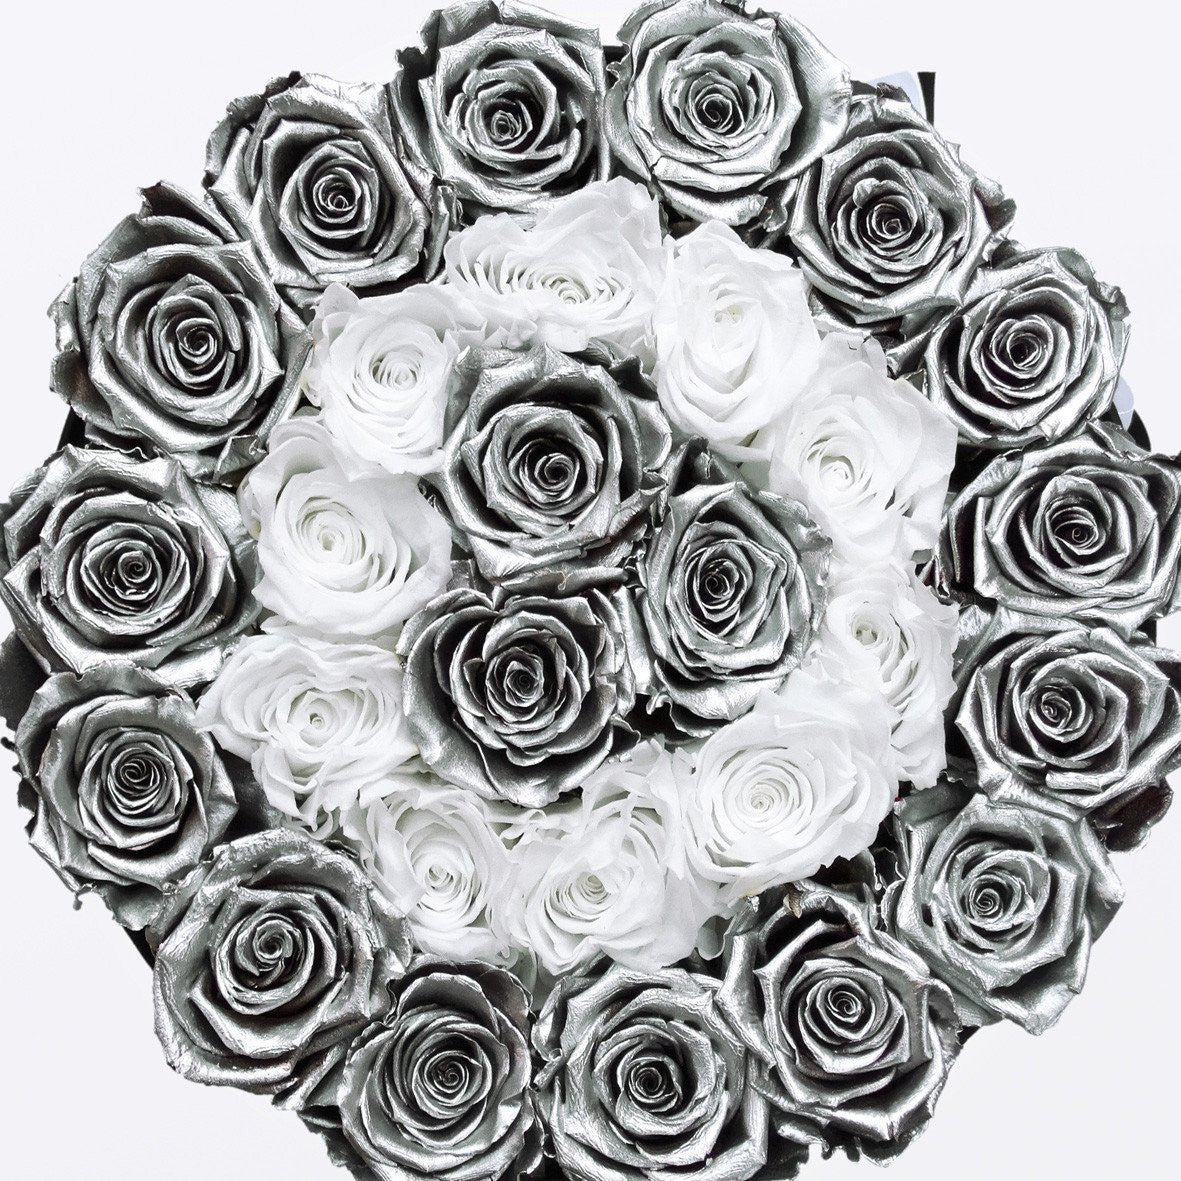 Aranjament de trandafiri criogenati albi și argintii